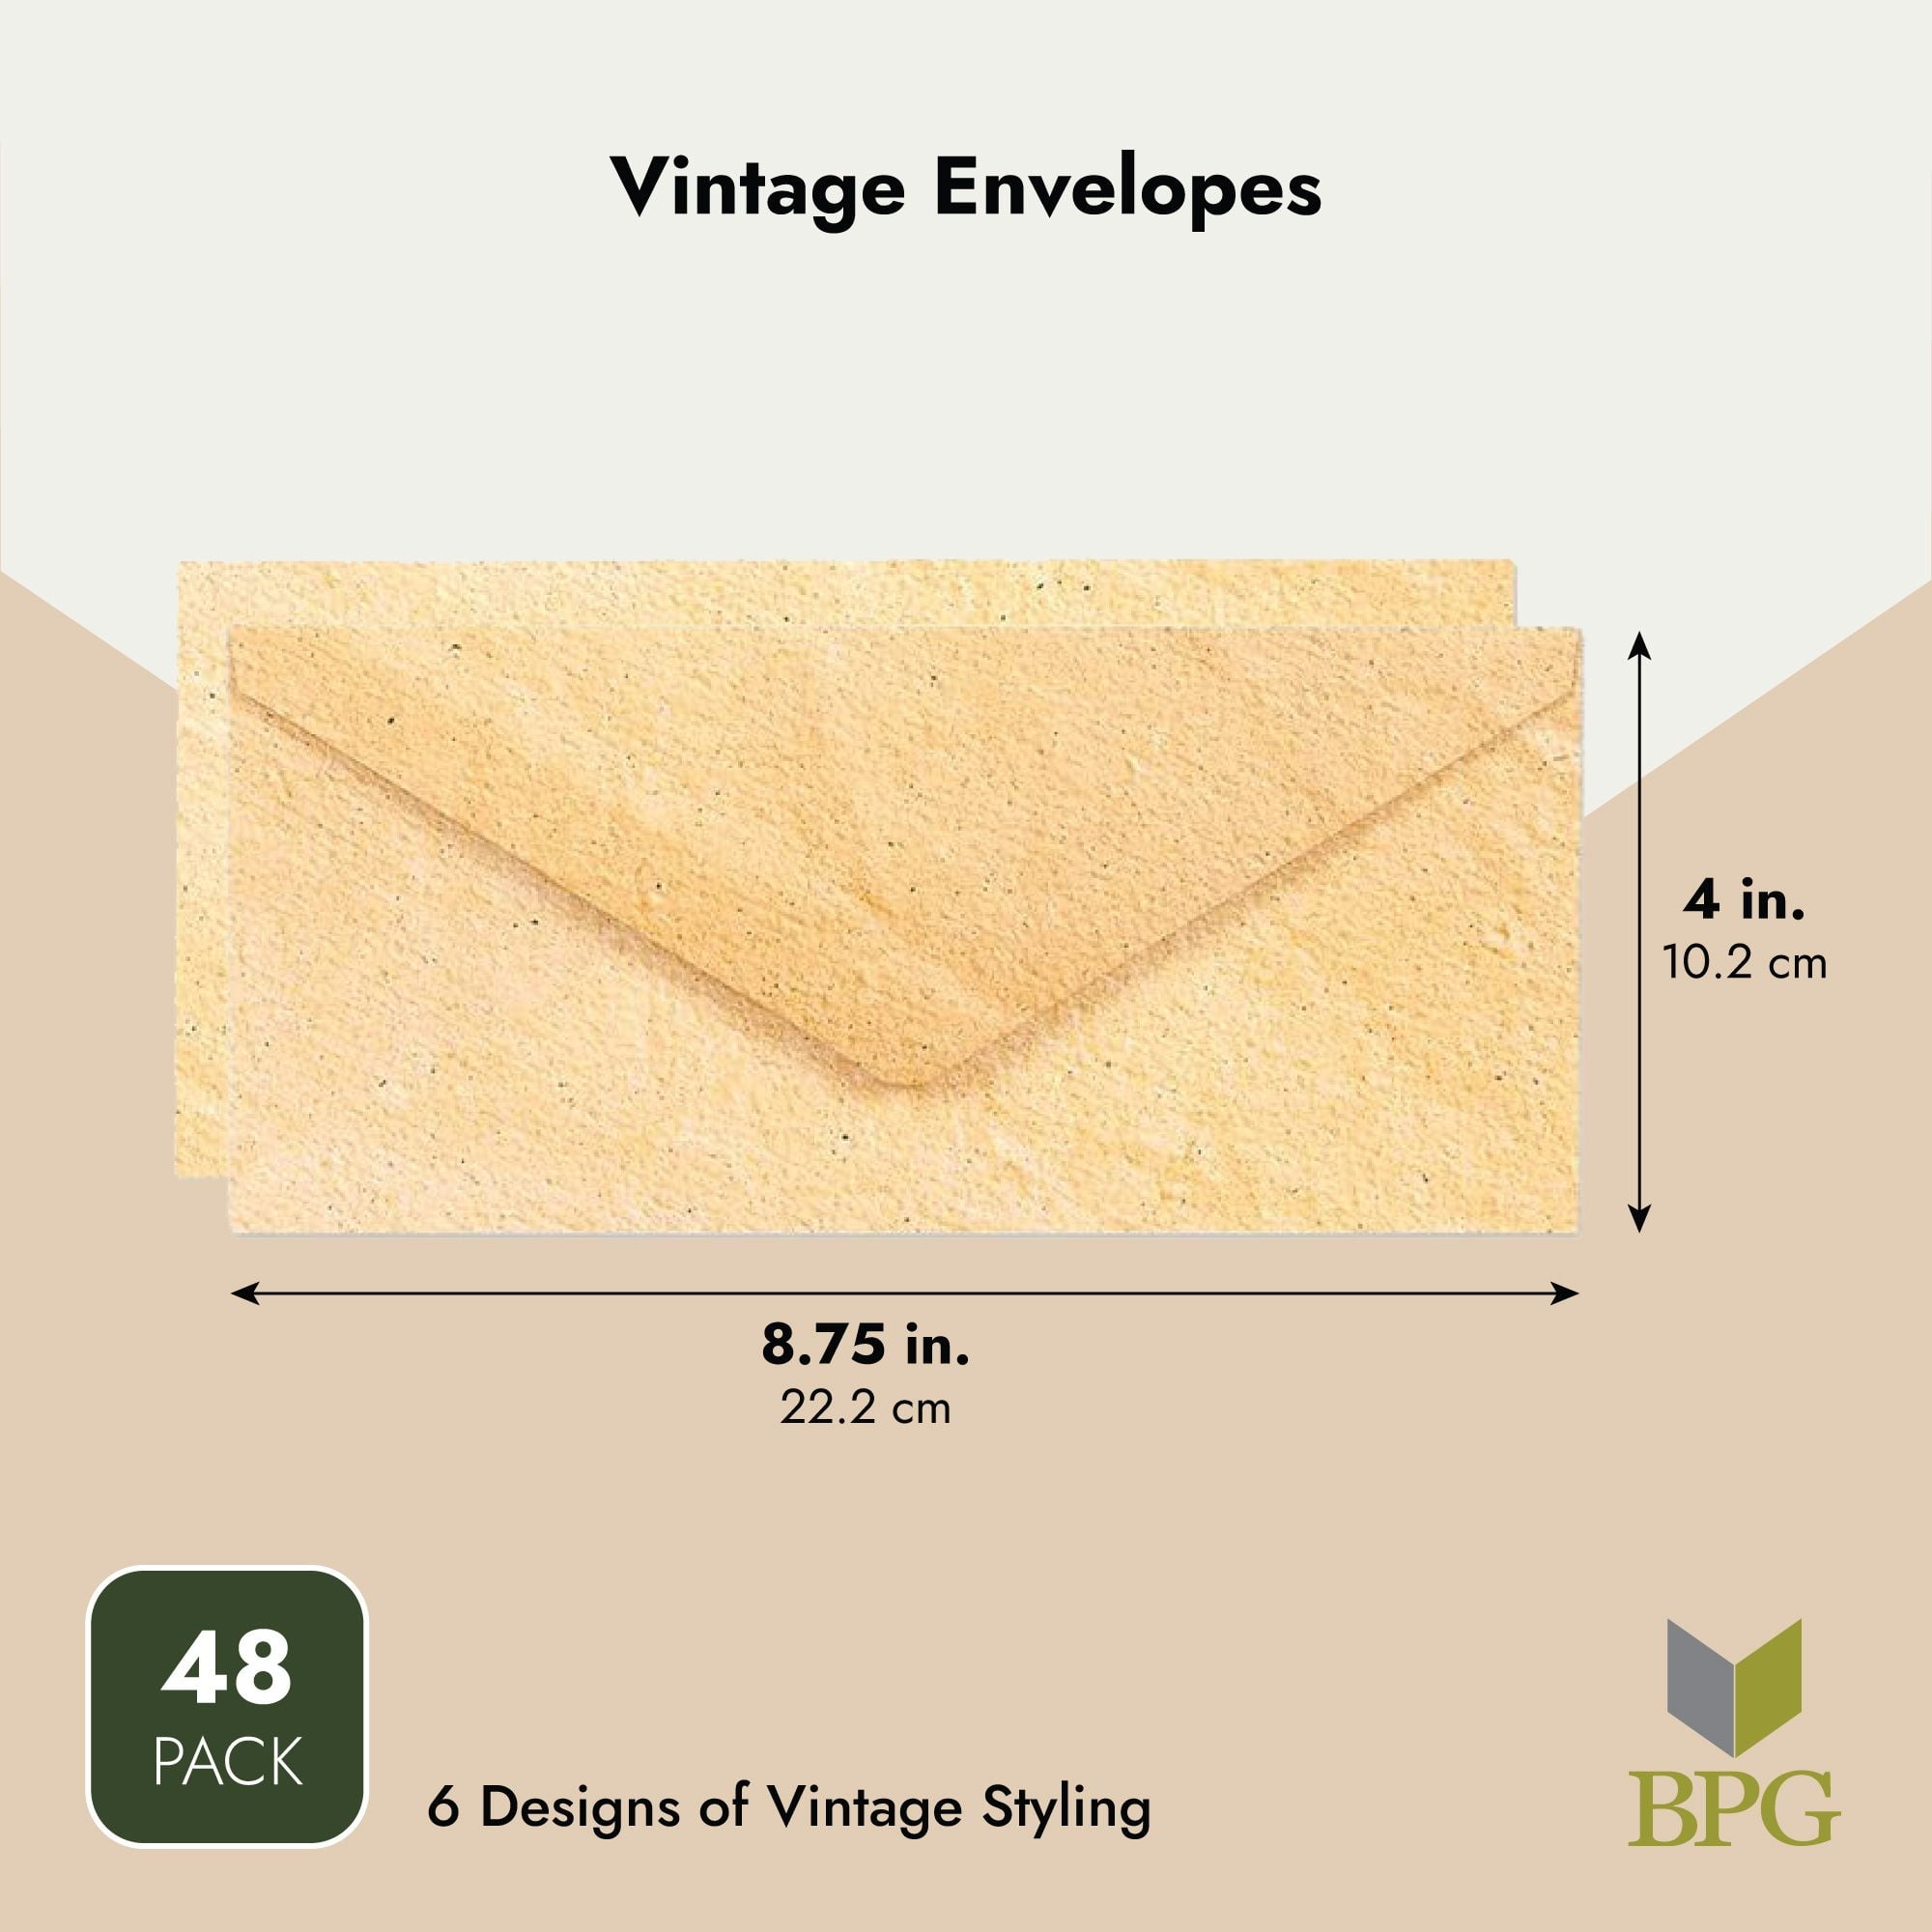  【Pack 48 】Vintage Envelopes - Vintage Style Envelopes -  Classic Aged Envelopes in 6 Unique Designs - Old Looking Envelopes- Antique  Style Envelopes- 4 x 8.7 inches (48 Pack) : Office Products